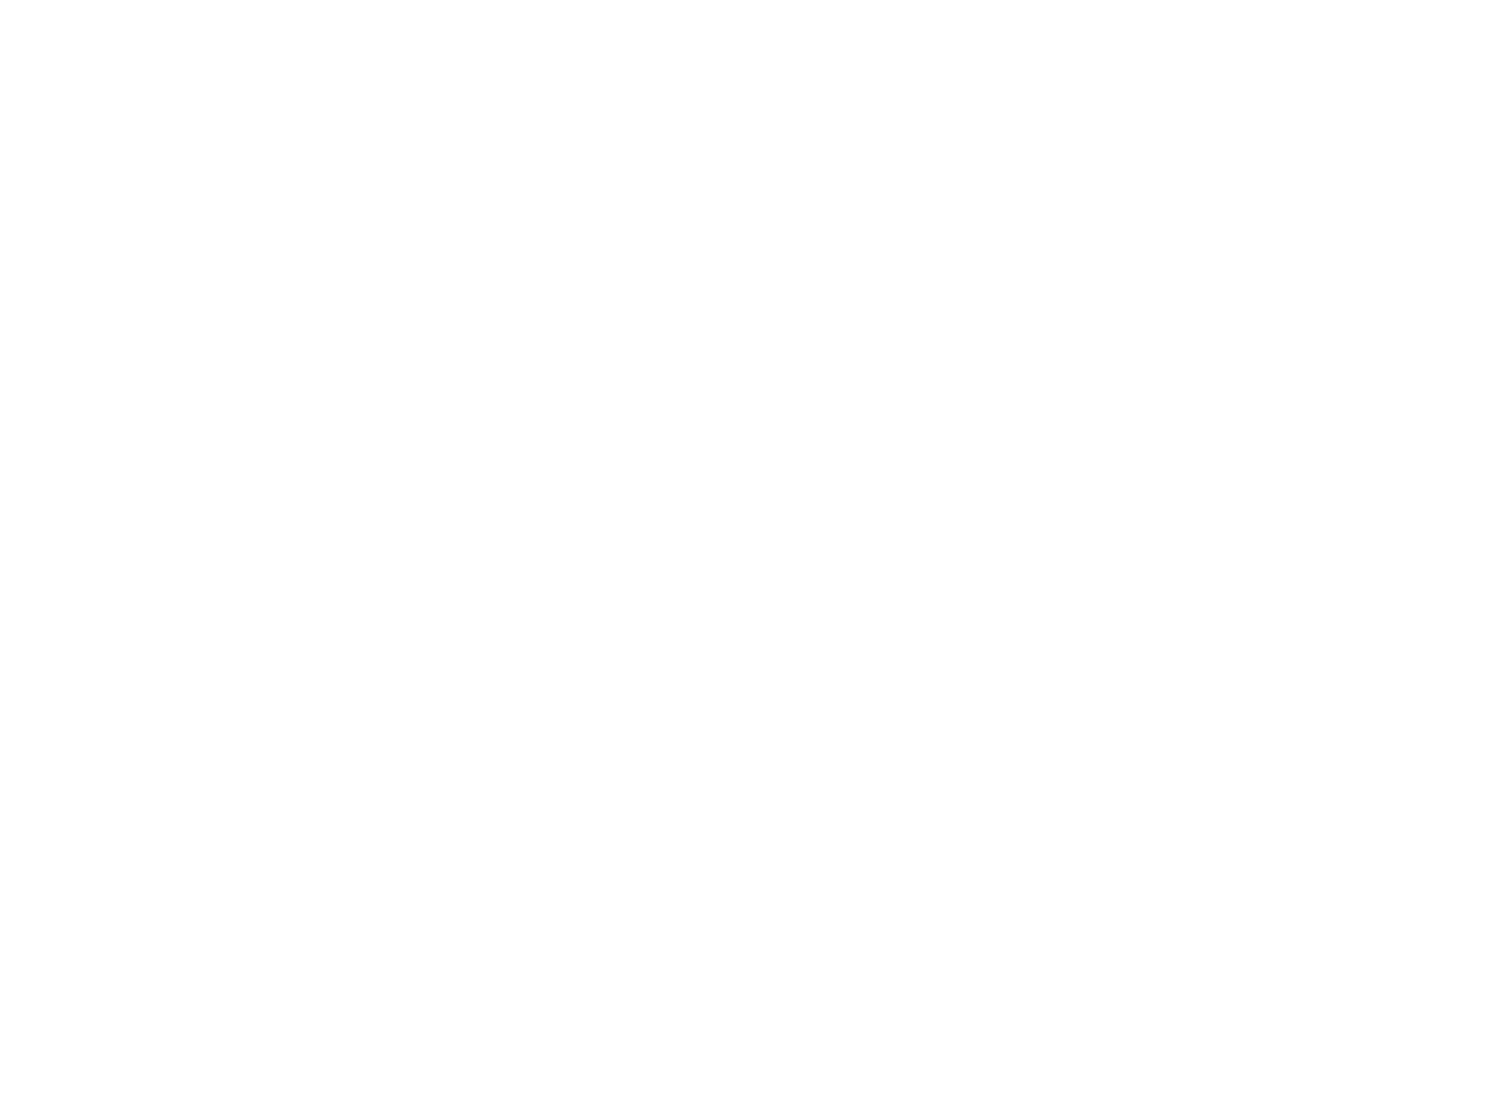 Penscope